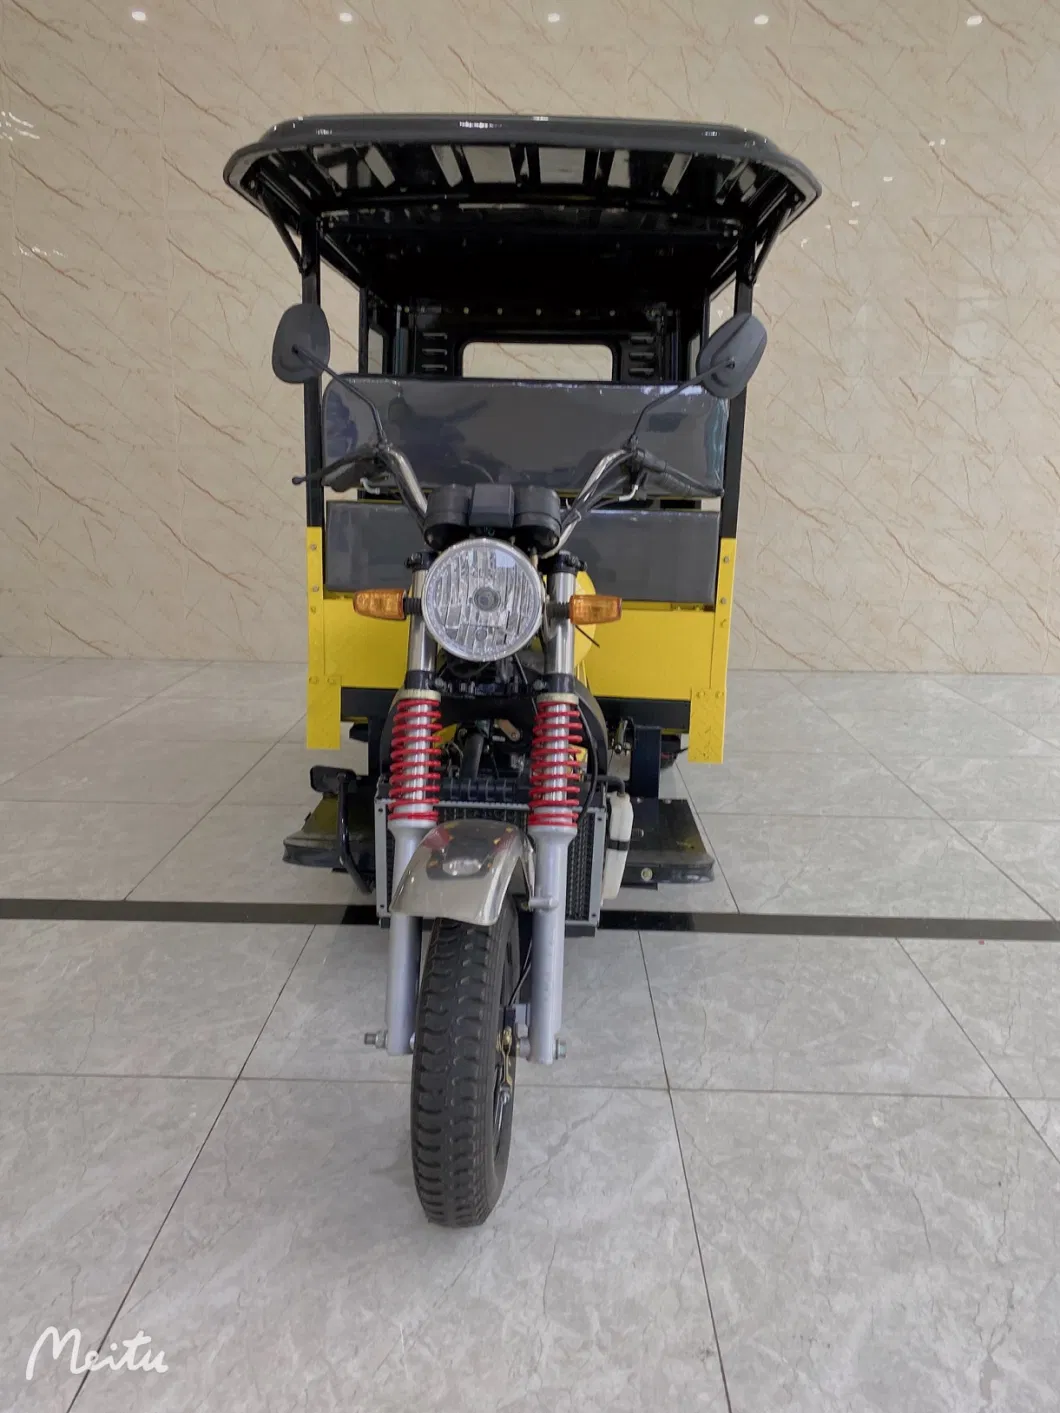 Electric Start Tok Tok Chinese 3 Wheel Motorcycle Gasoline Engine Powered Model